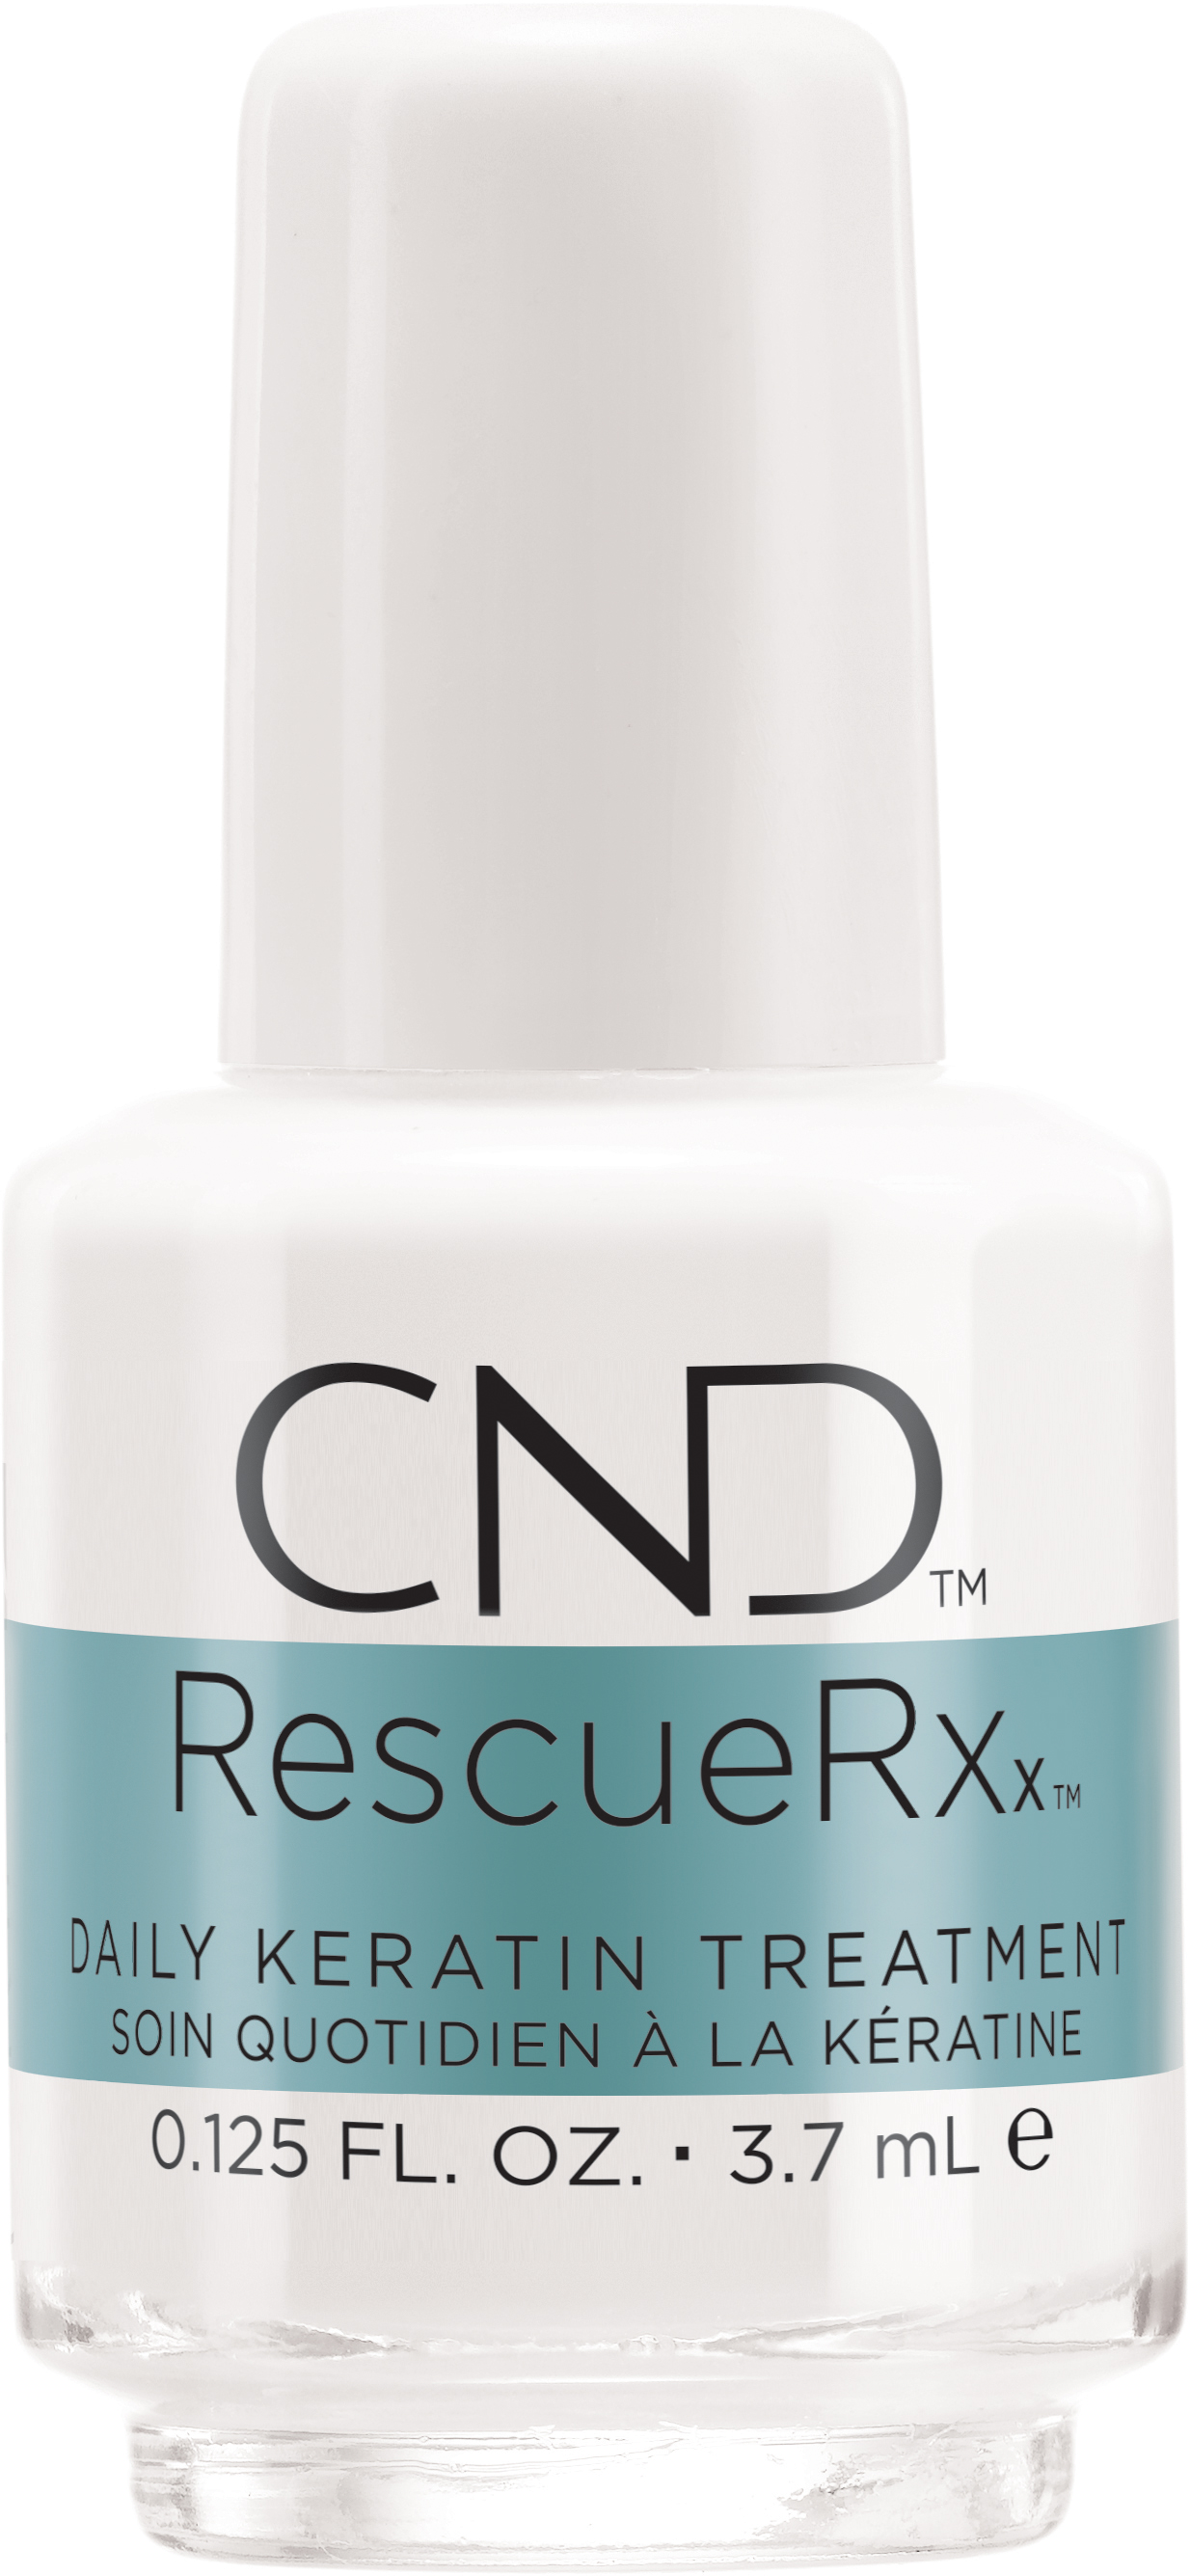 Billede af CND Rescue RXx Treatment 3.7 ml.